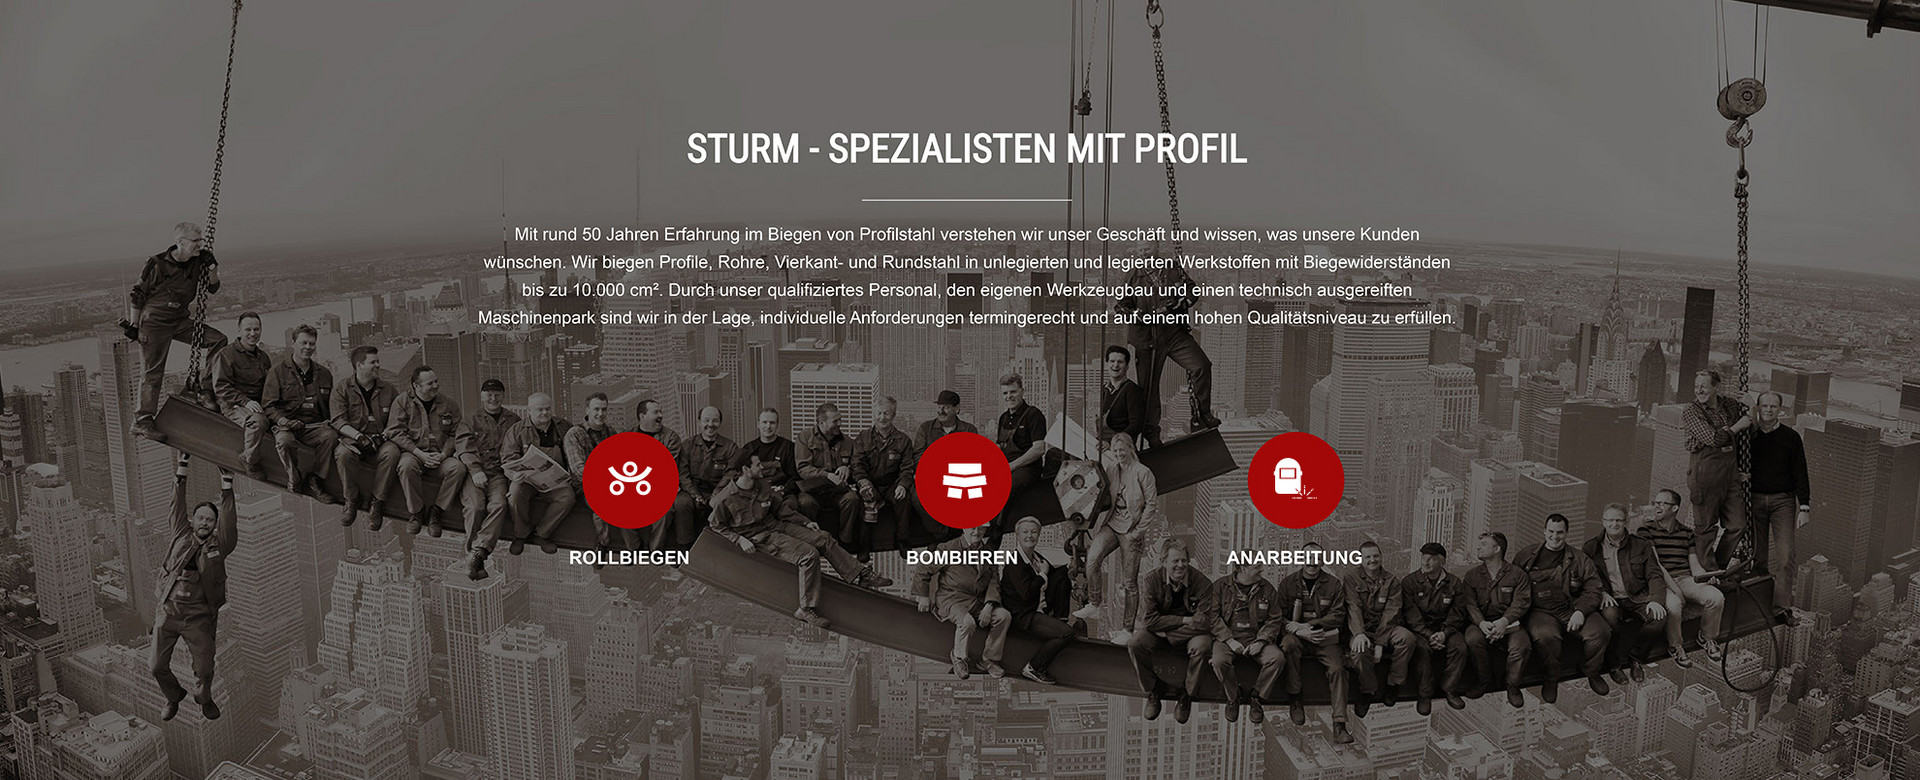 STURM Metallbearbeitung GmbH & Co. KG